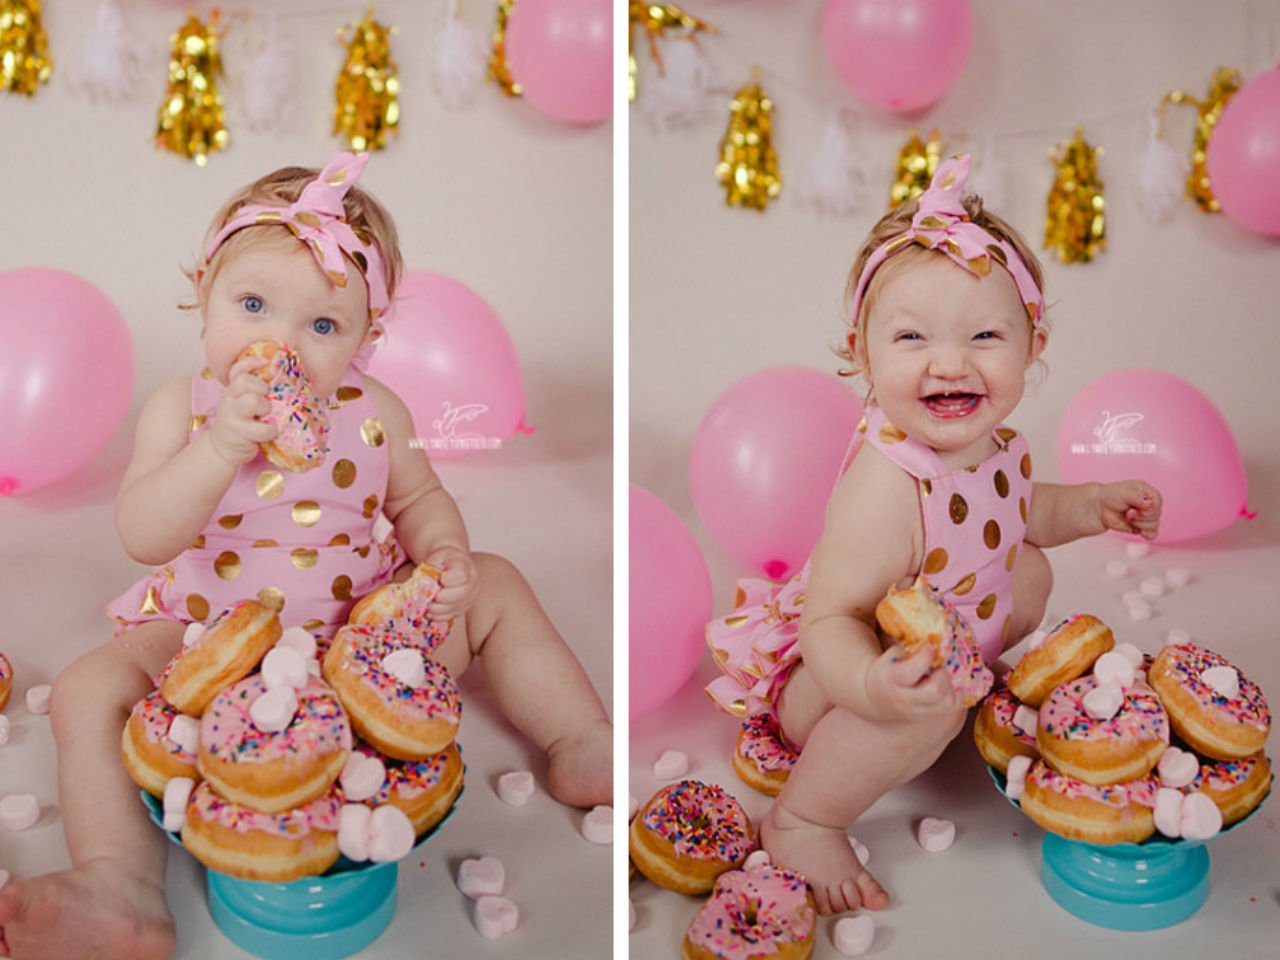 Baby enjoying a donut smash on her first birthday